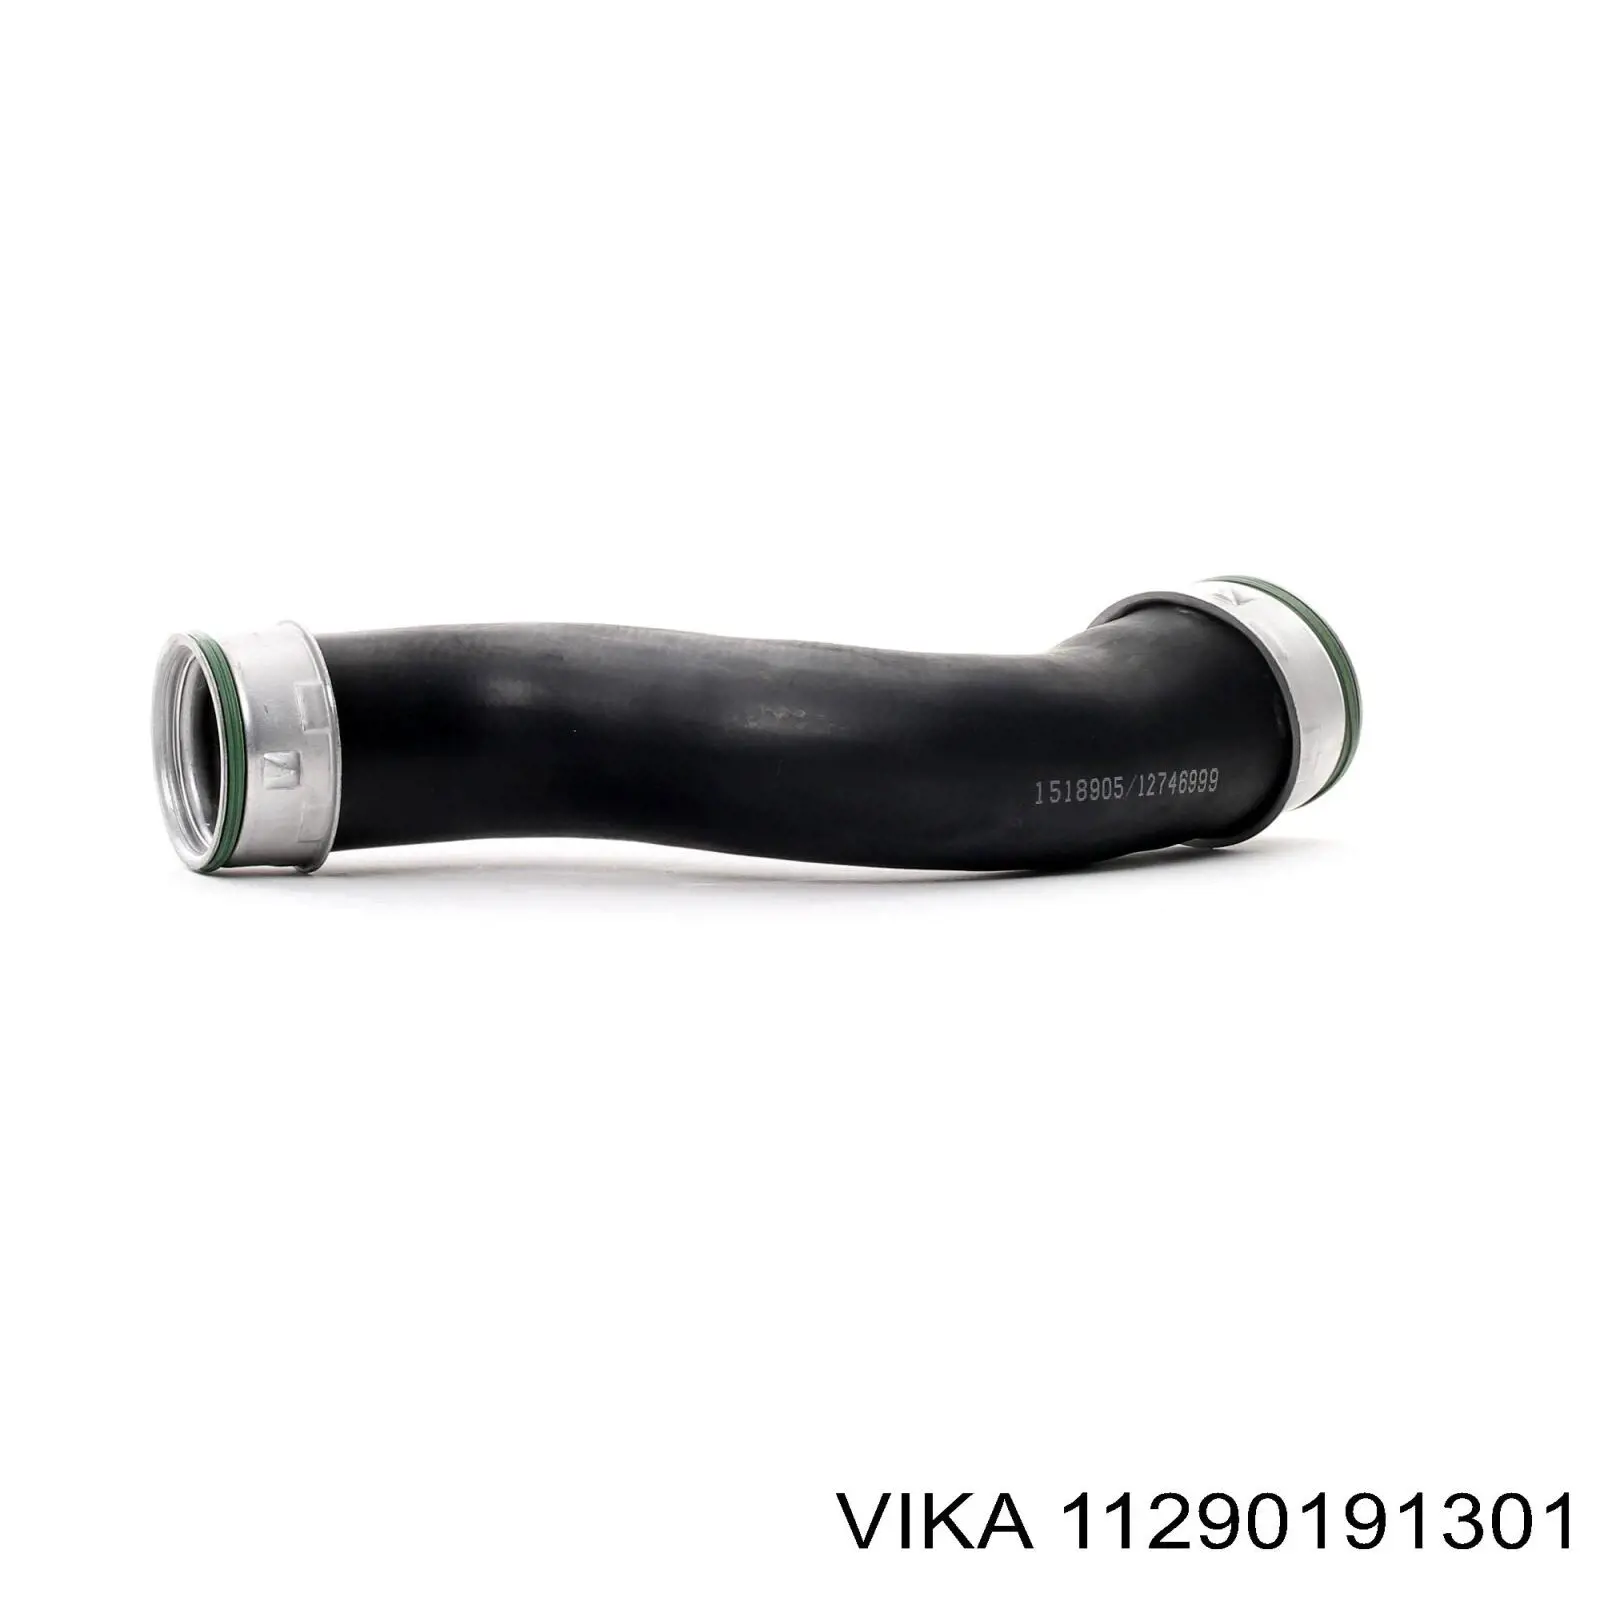 11290191301 Vika tubo flexible de aspiración, entrada del filtro de aire